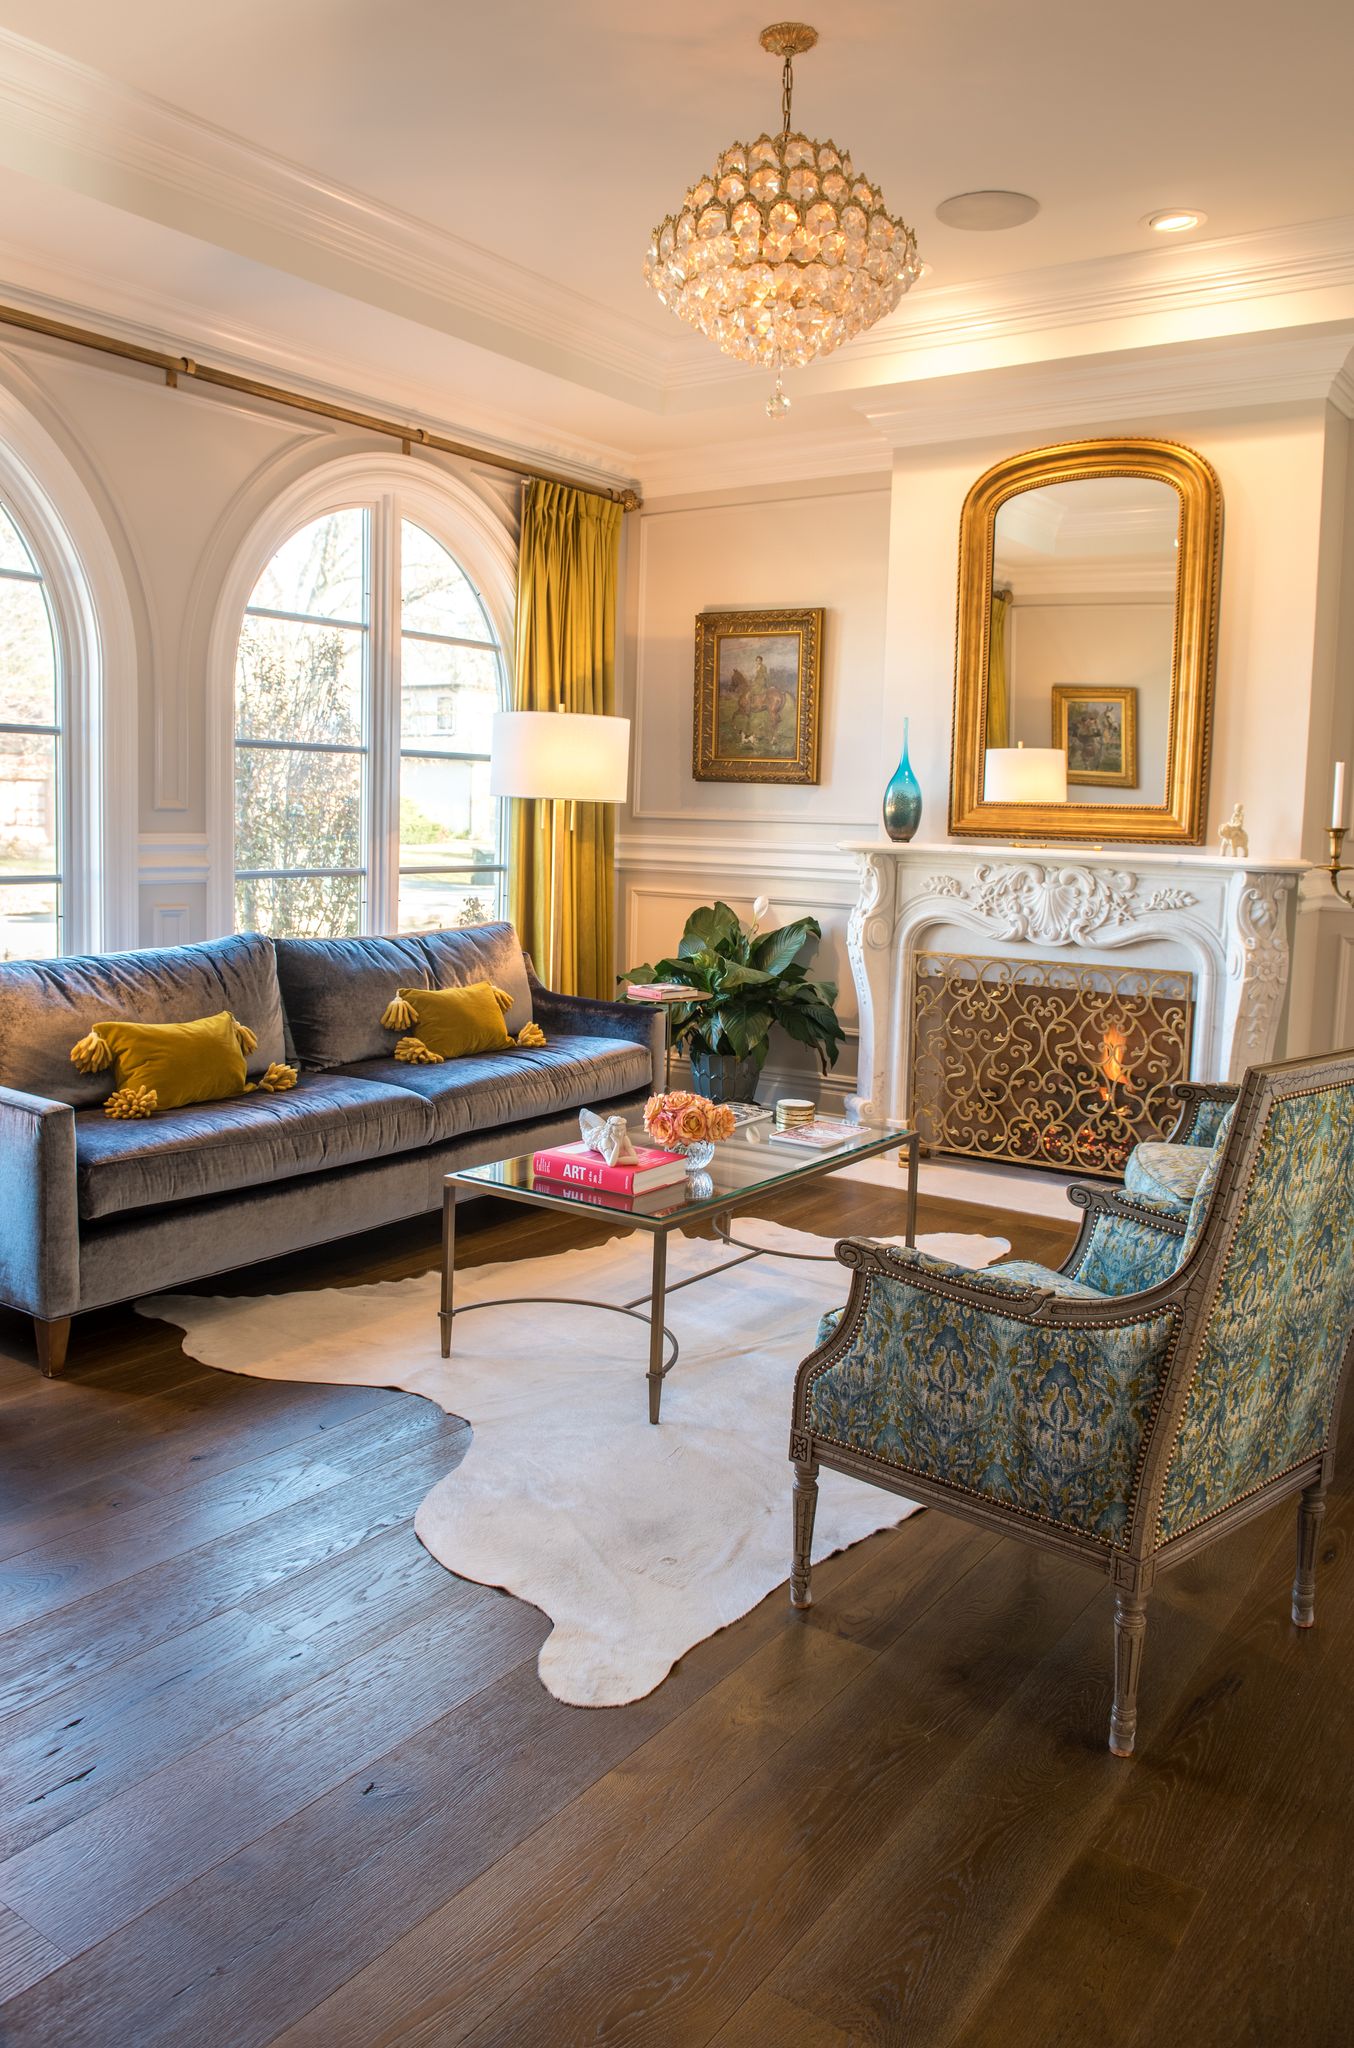 Elegant French inspired living room with Louis style fireplace and beautiful warm brown hardwood flooring by Carlisle. #fhardwoodloors #interiordesign #hardwoodfloor #carlisle